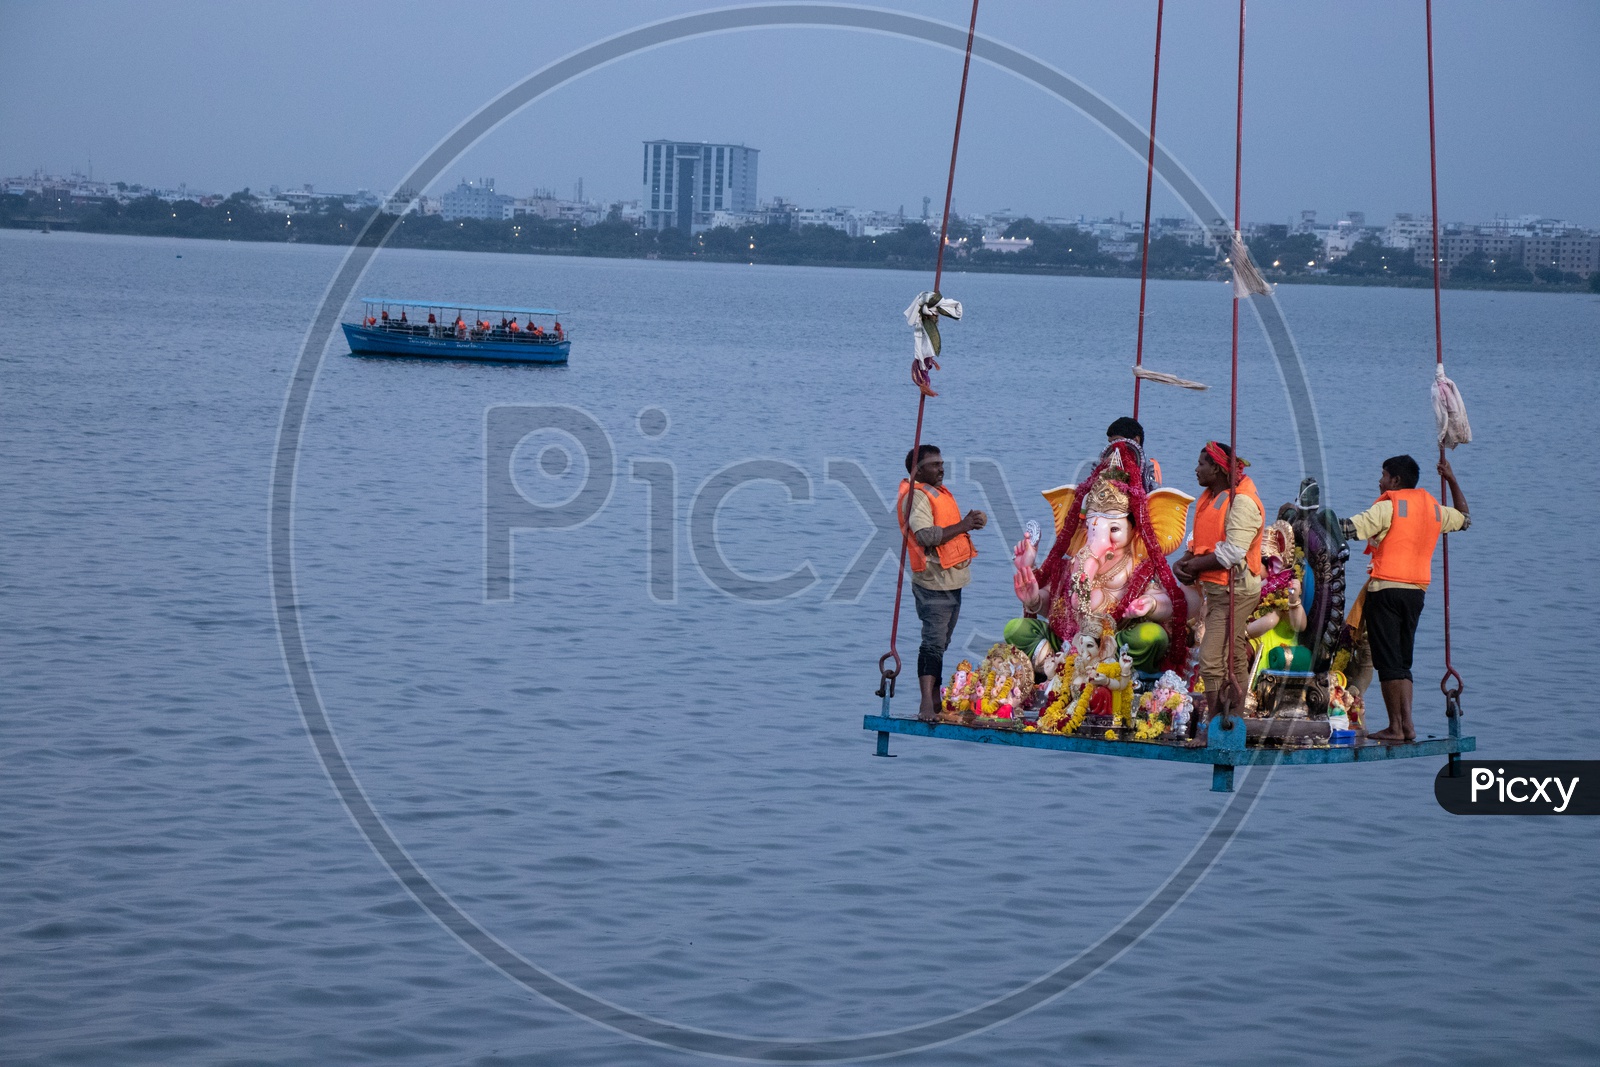 Lord Ganesh Idols On Cranes While Visarjan or Nimarjan event At Tankbund In Hyderabad